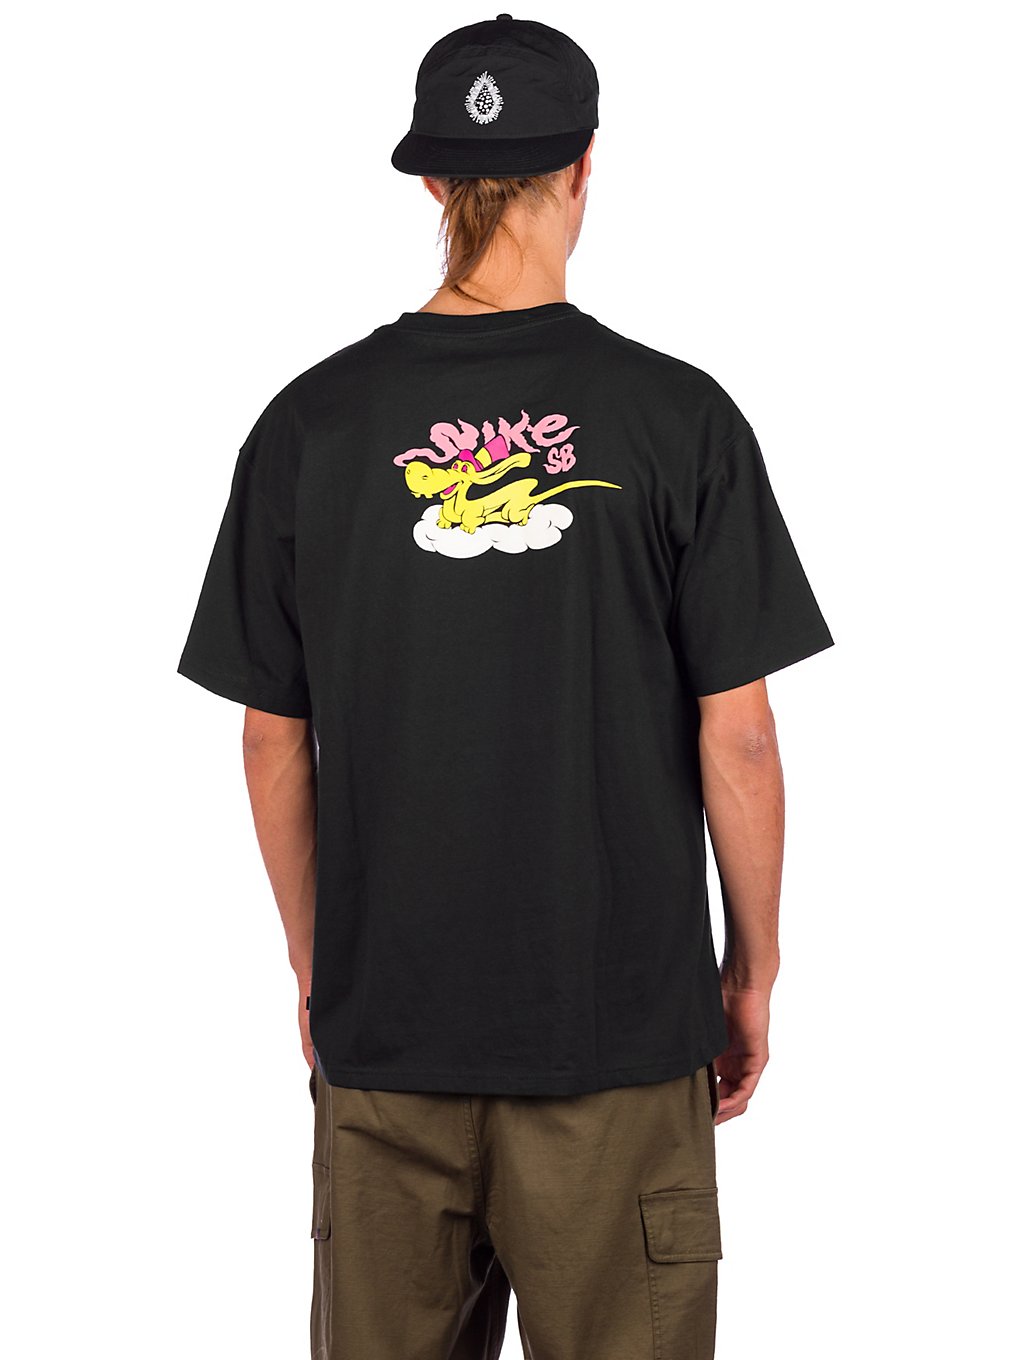 Nike Dragon T-Shirt black